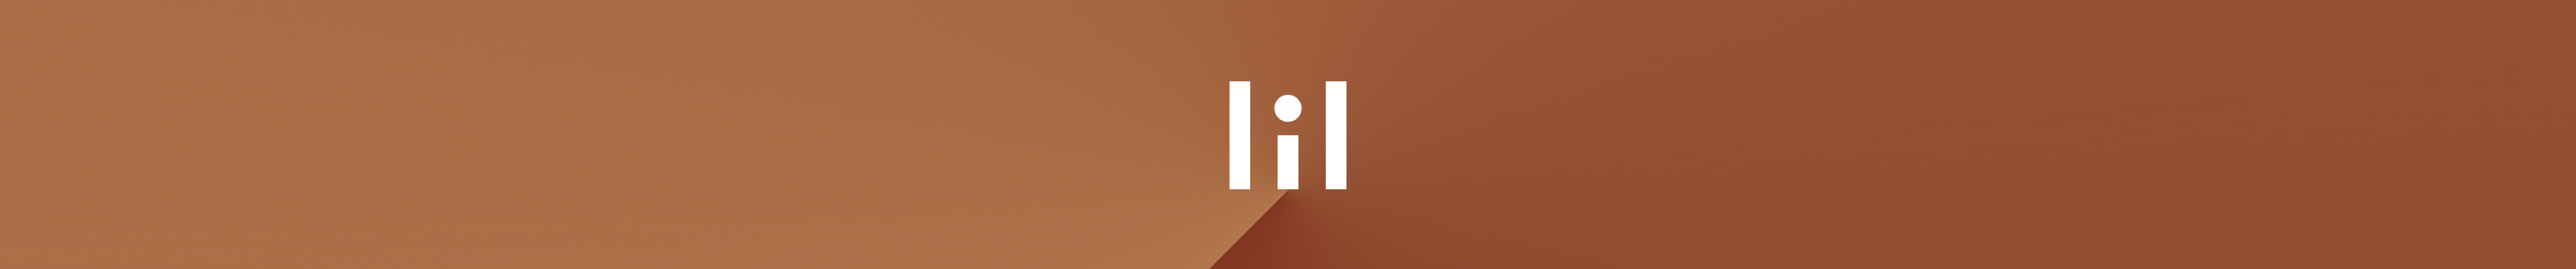 liminal design's profile banner